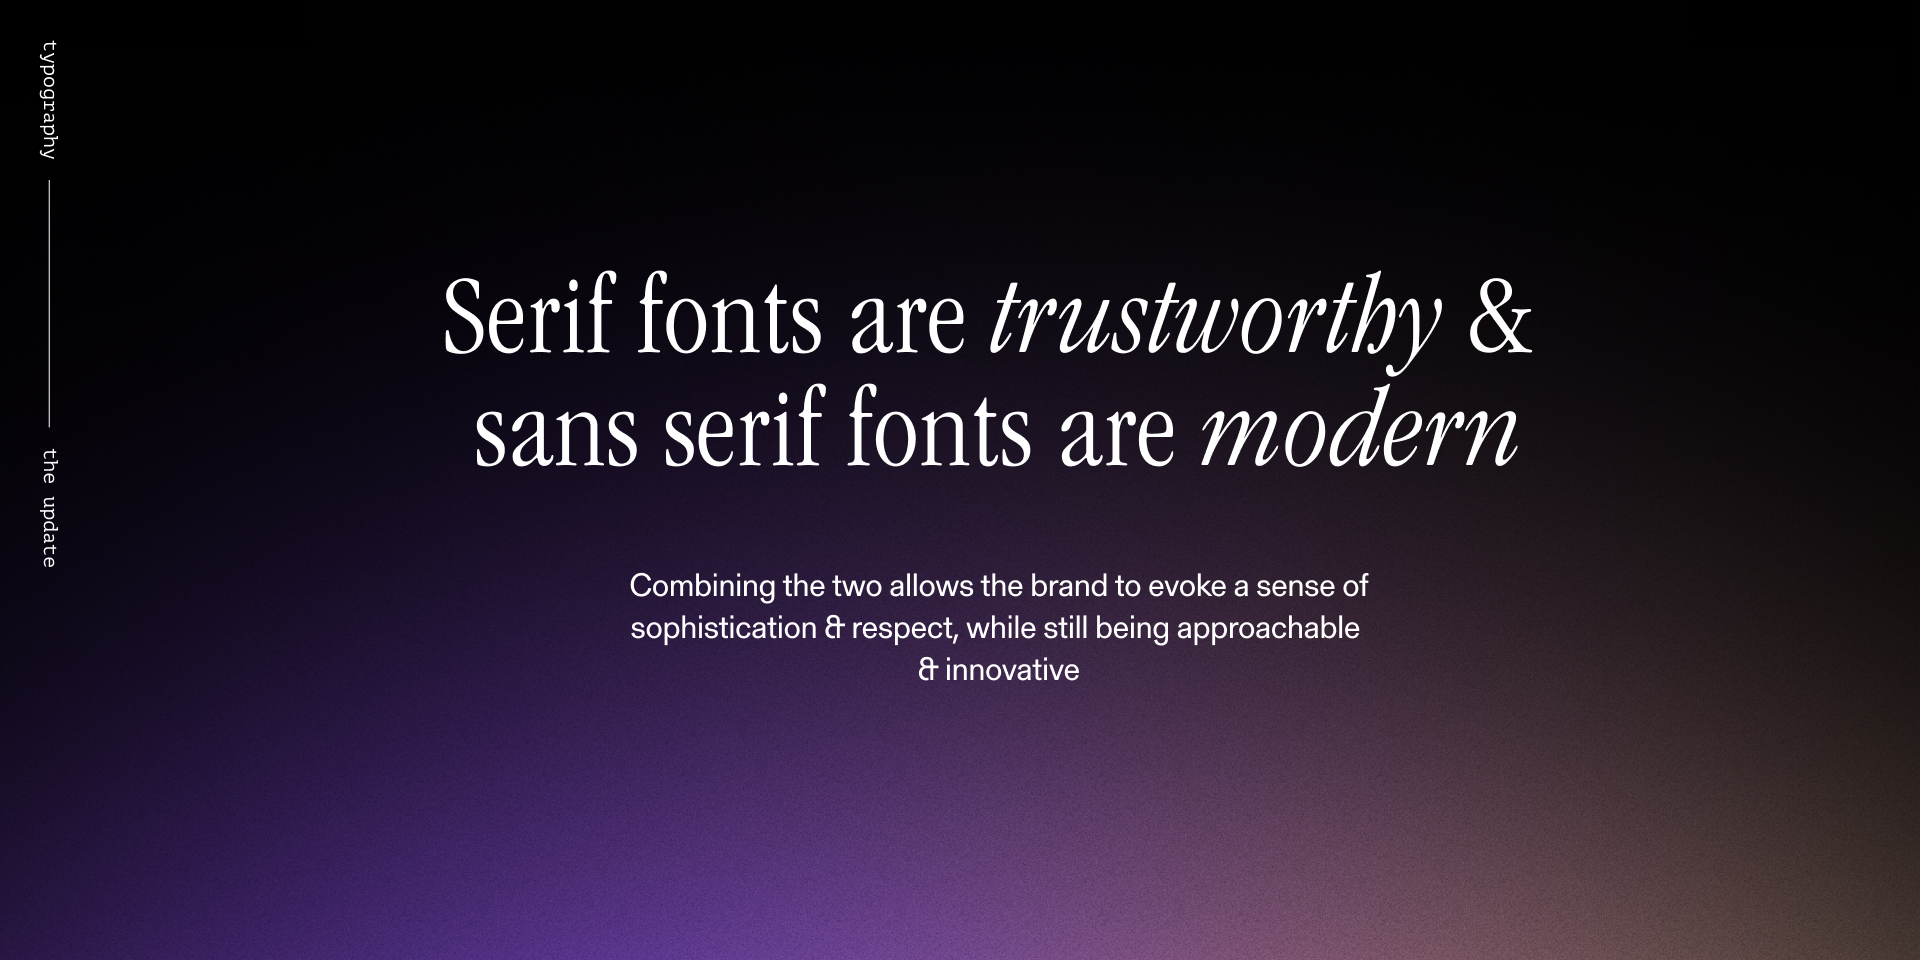 Typography-update: Reason